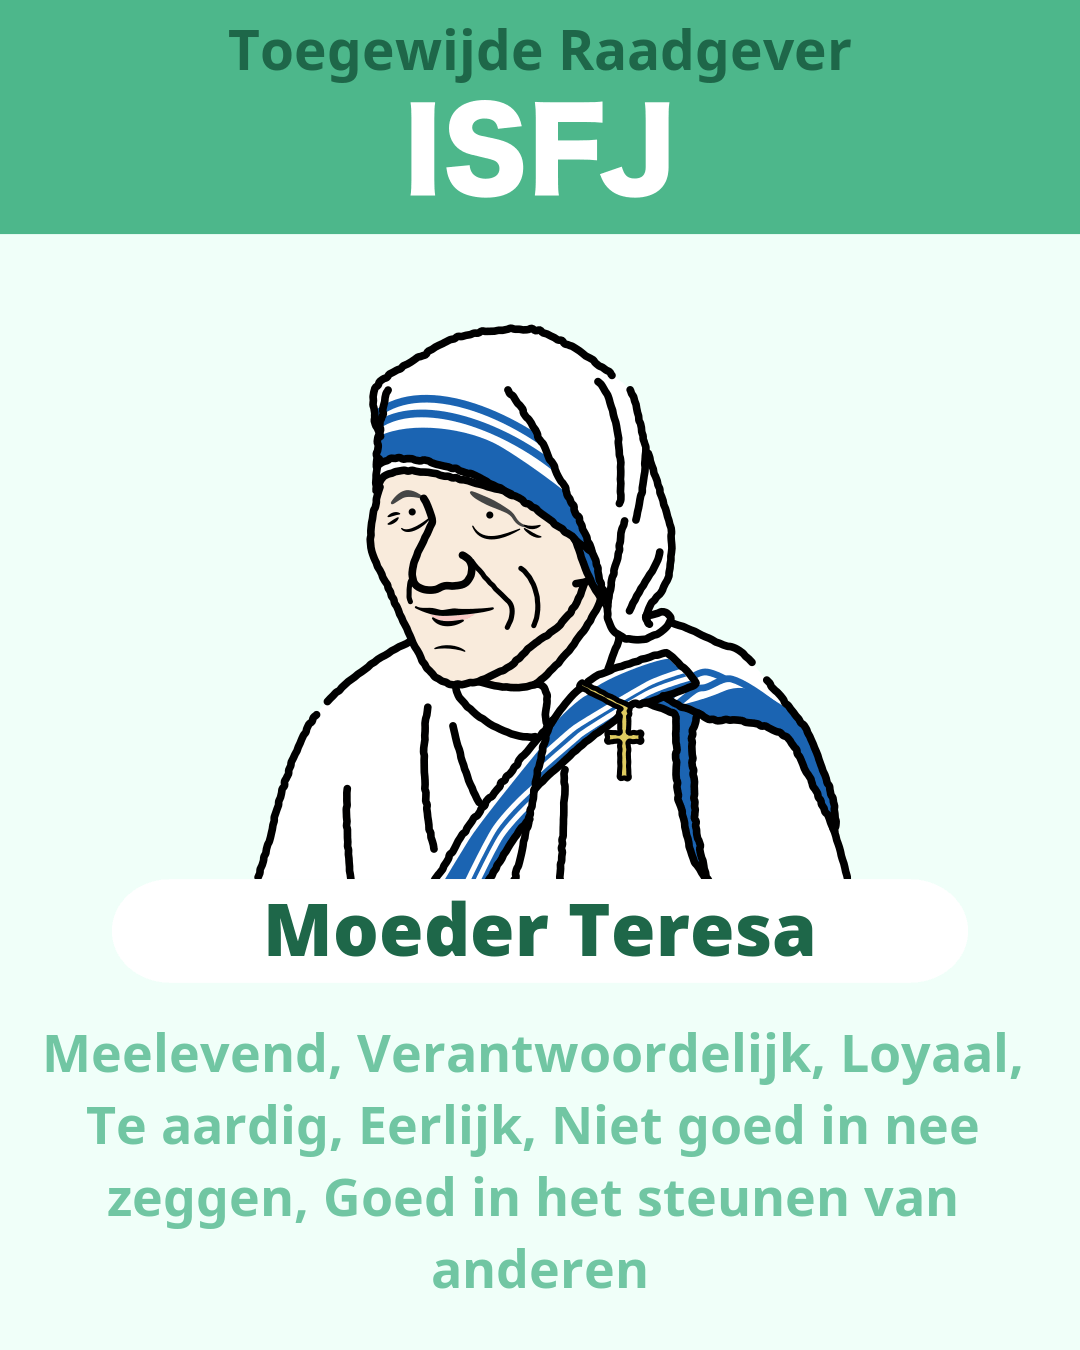 Moeder Teresa - ISFJ